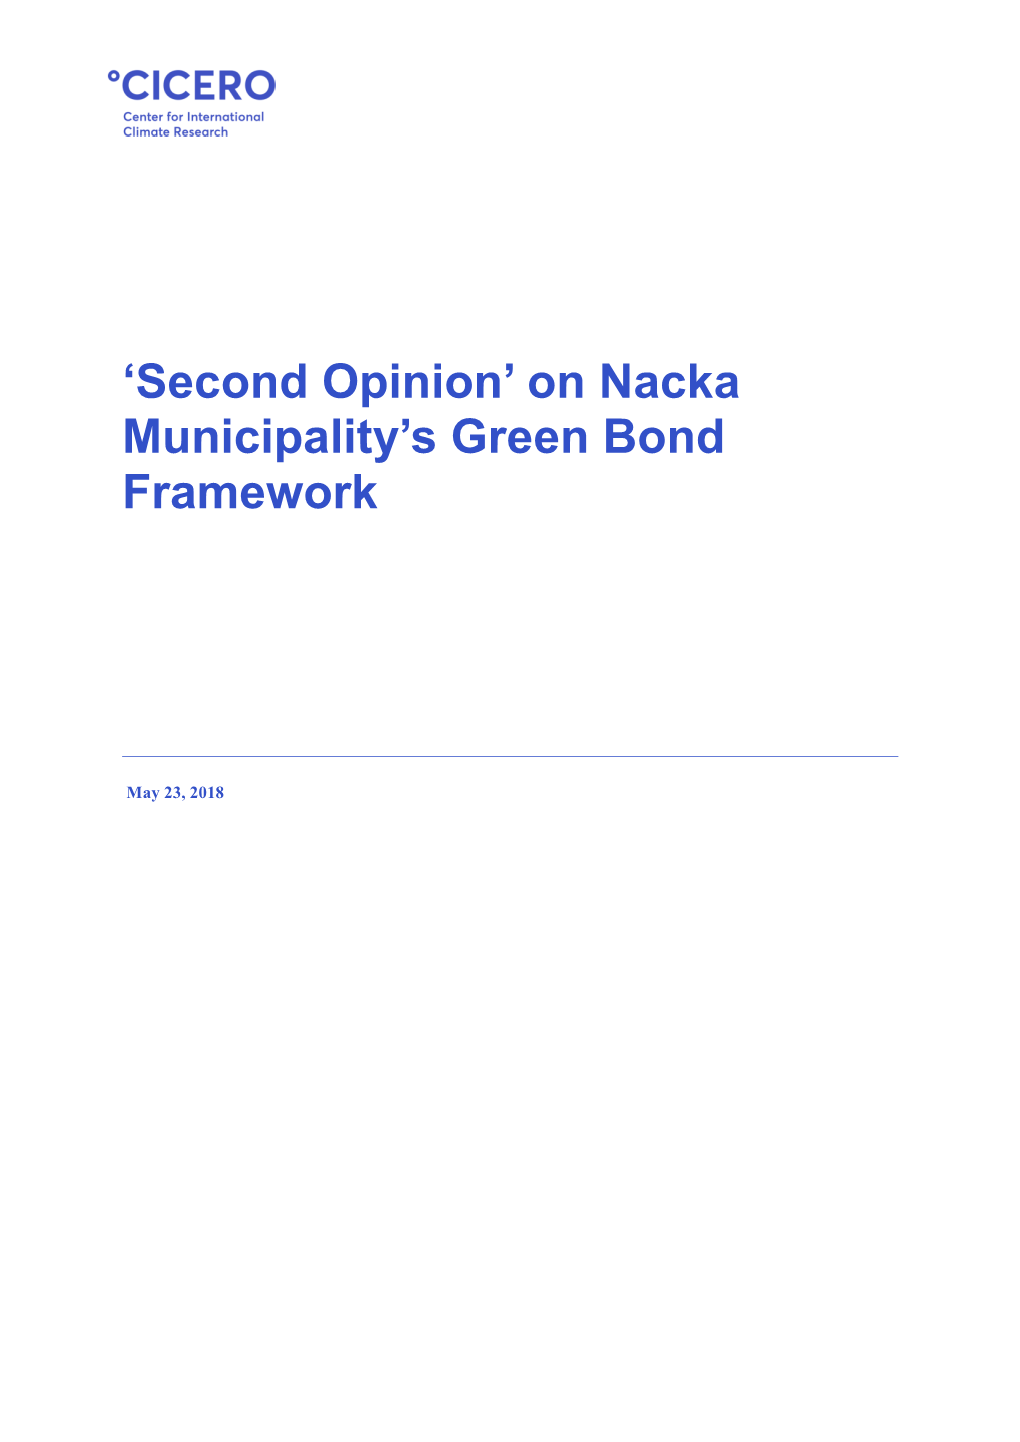 'Second Opinion' on Nacka Municipality's Green Bond Framework